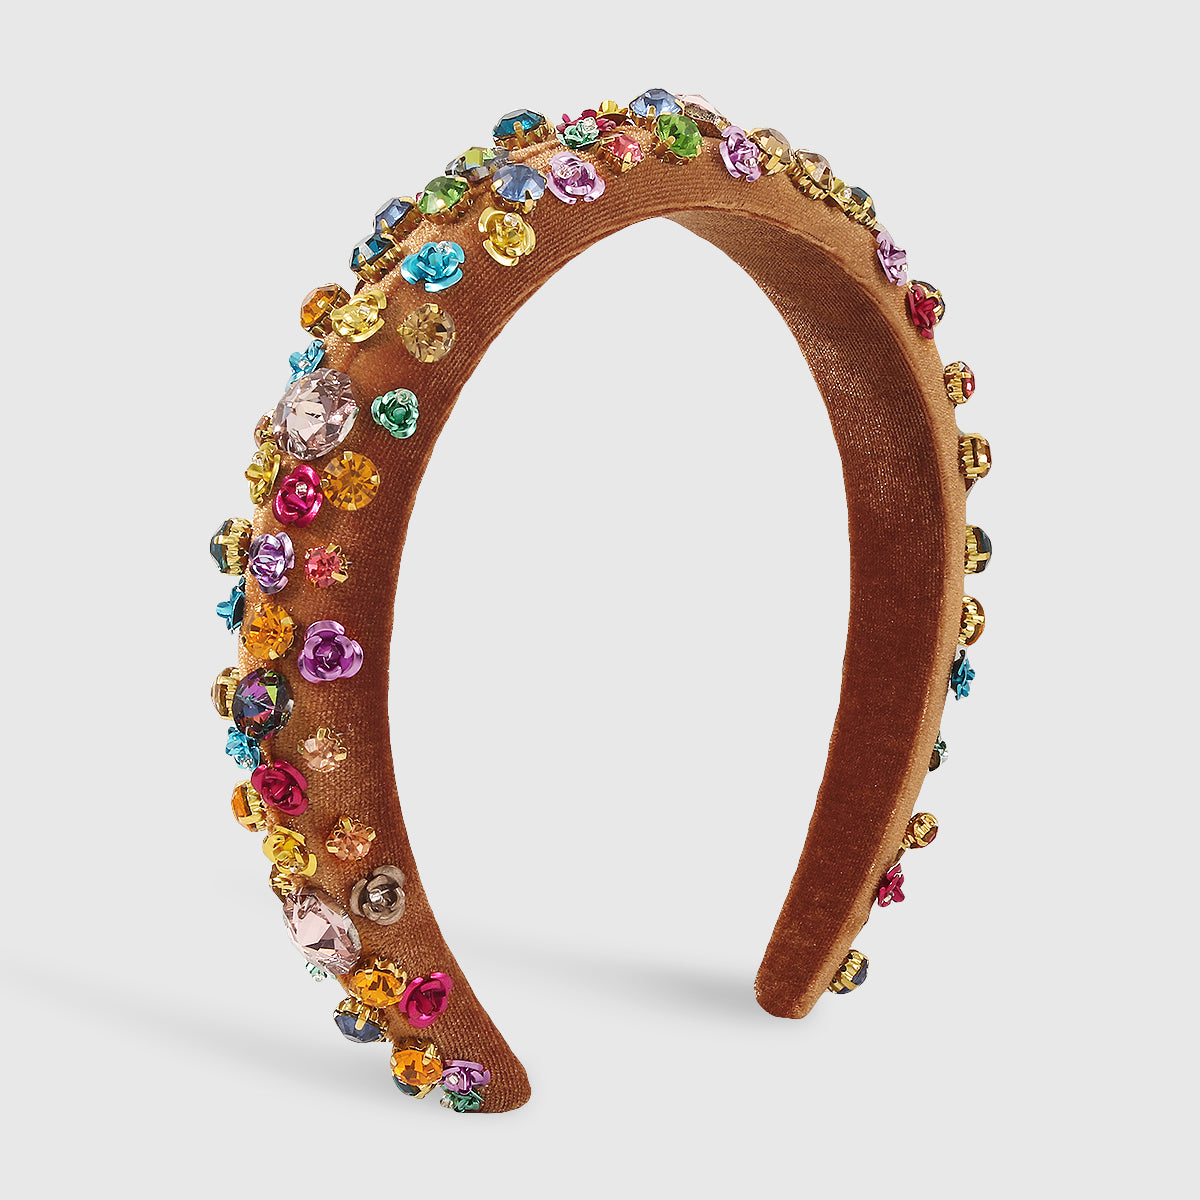 Baroque Metal Flower Rhinestone Sponge Headband medyjewelry